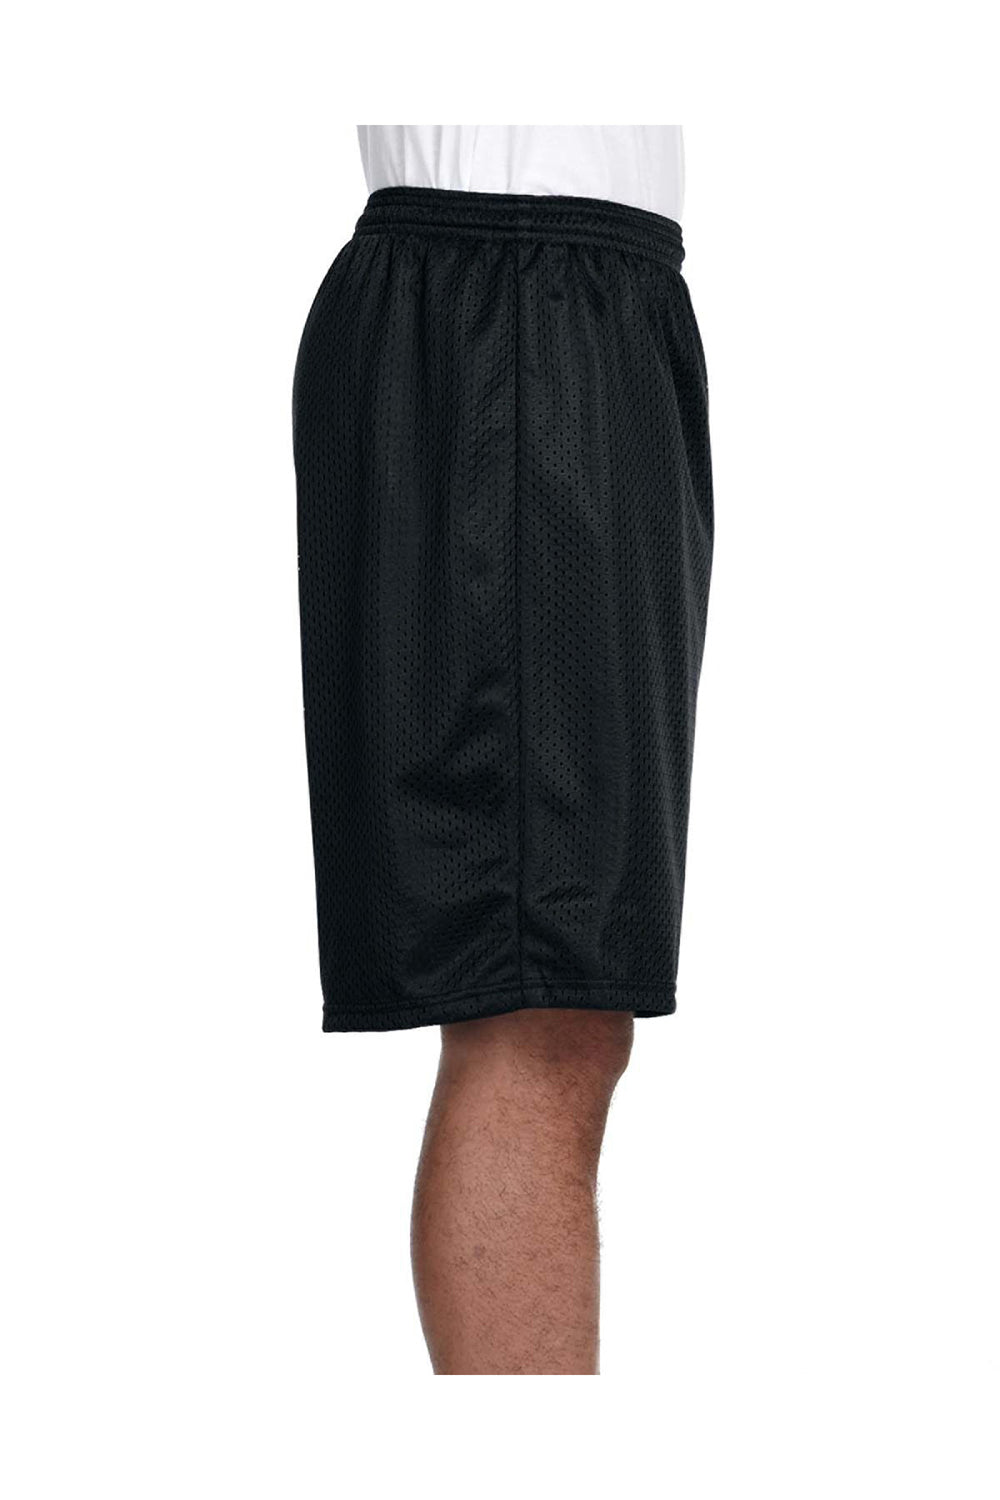 A4 N5296 Mens Moisture Wicking Tricot Mesh Shorts Black Model Side